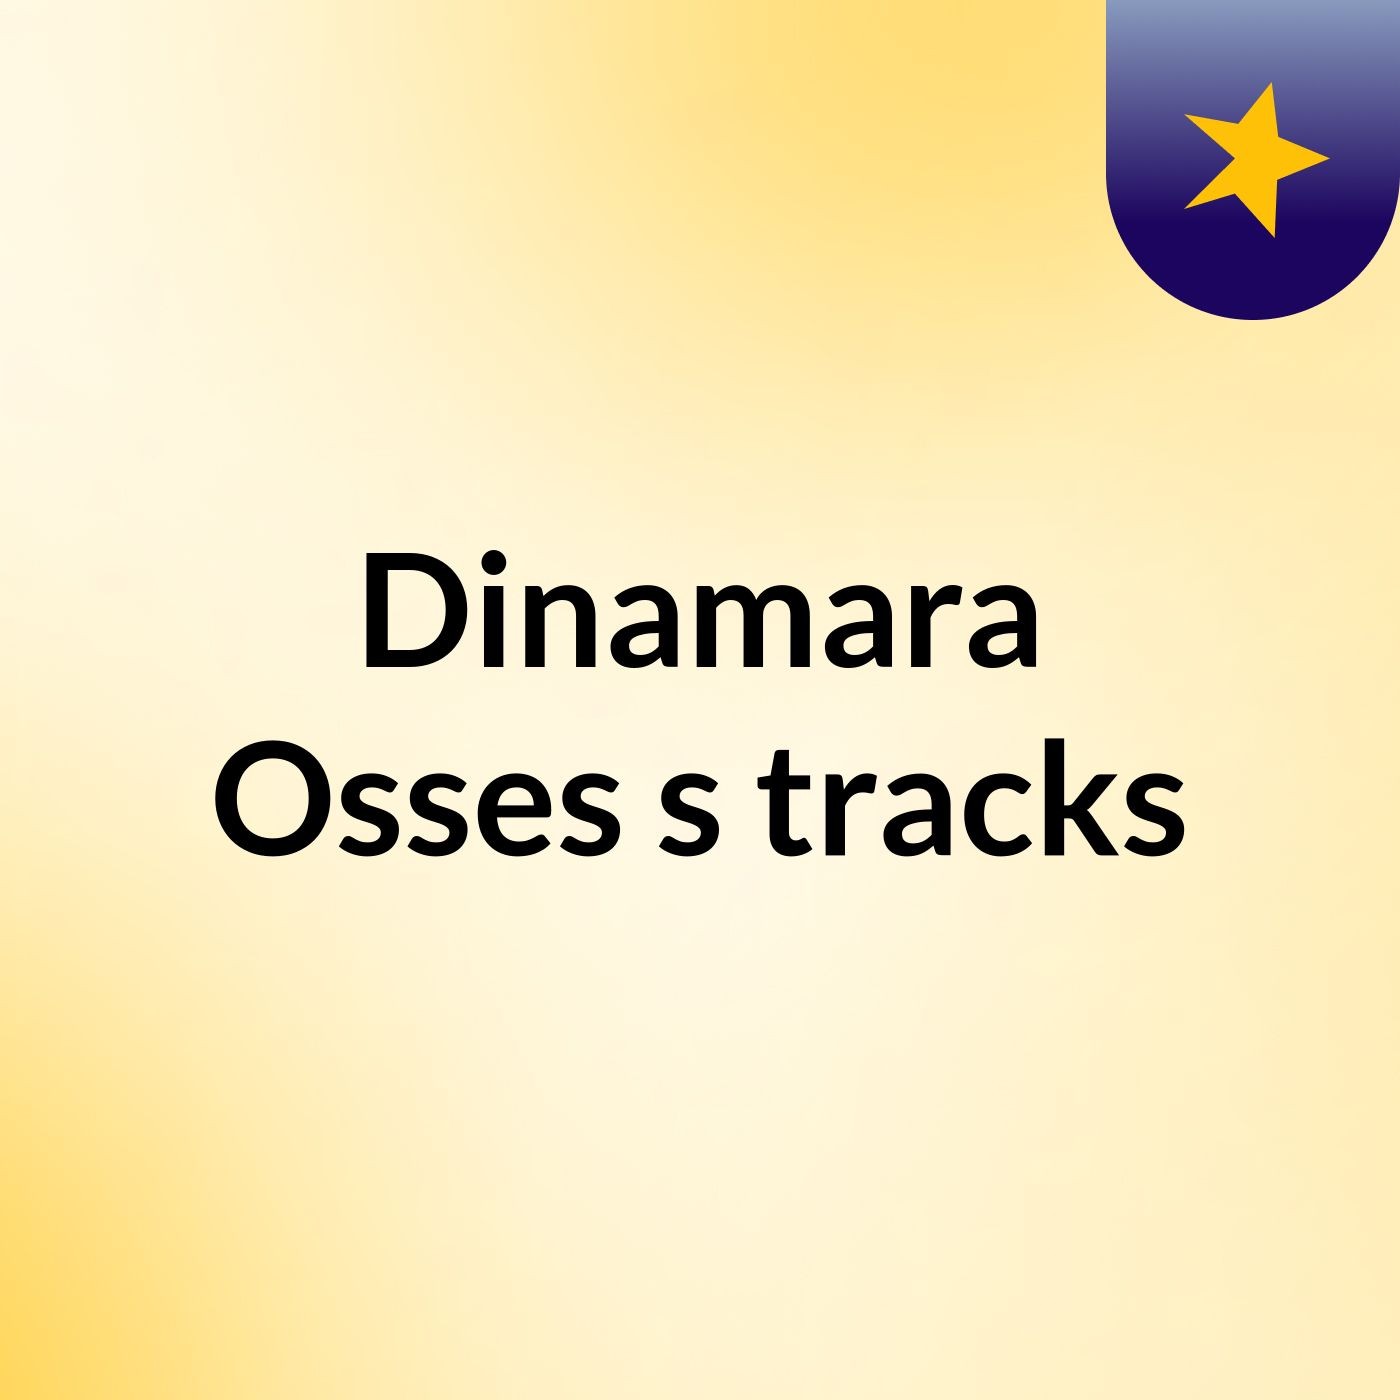 Dinamara Osses's tracks